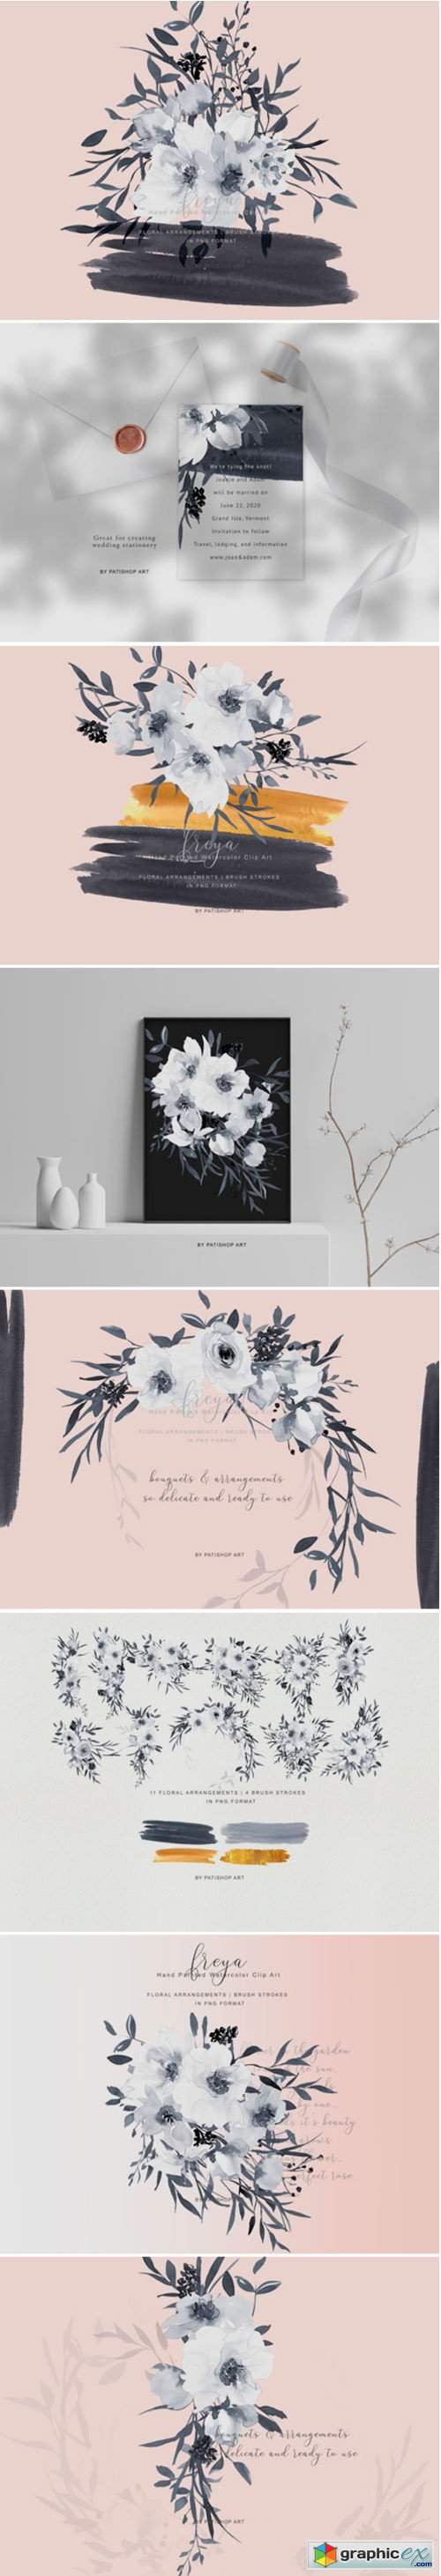 Elegant Gray & White Rose Bouquet Clipart